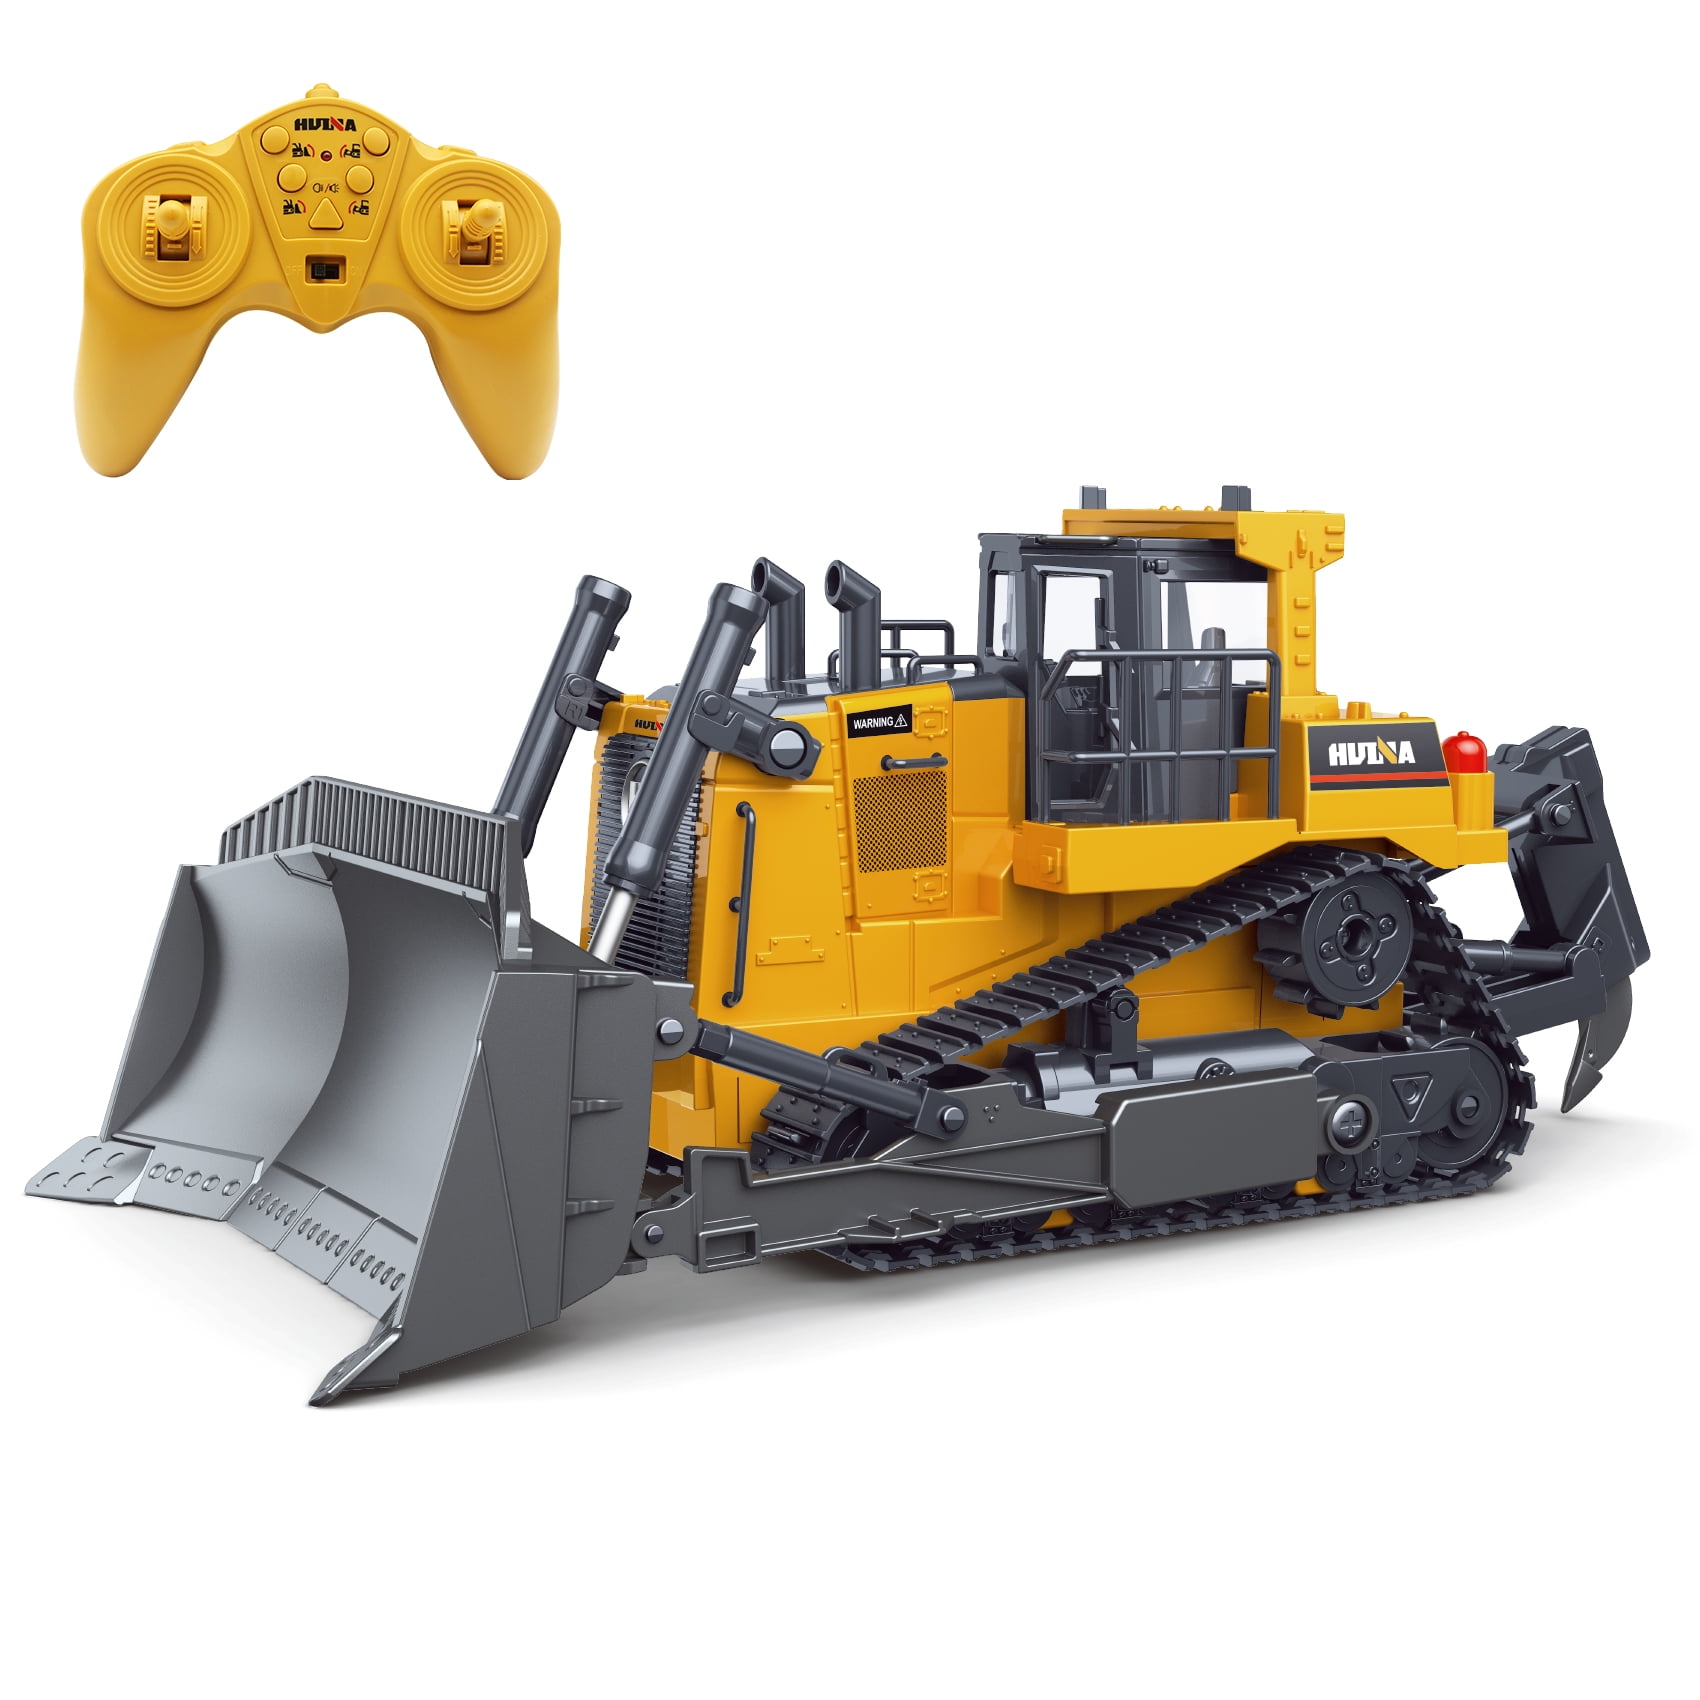 Motorized Extreme Bulldozer Toy for KIDS Details about      XTREME POWER DOZER 